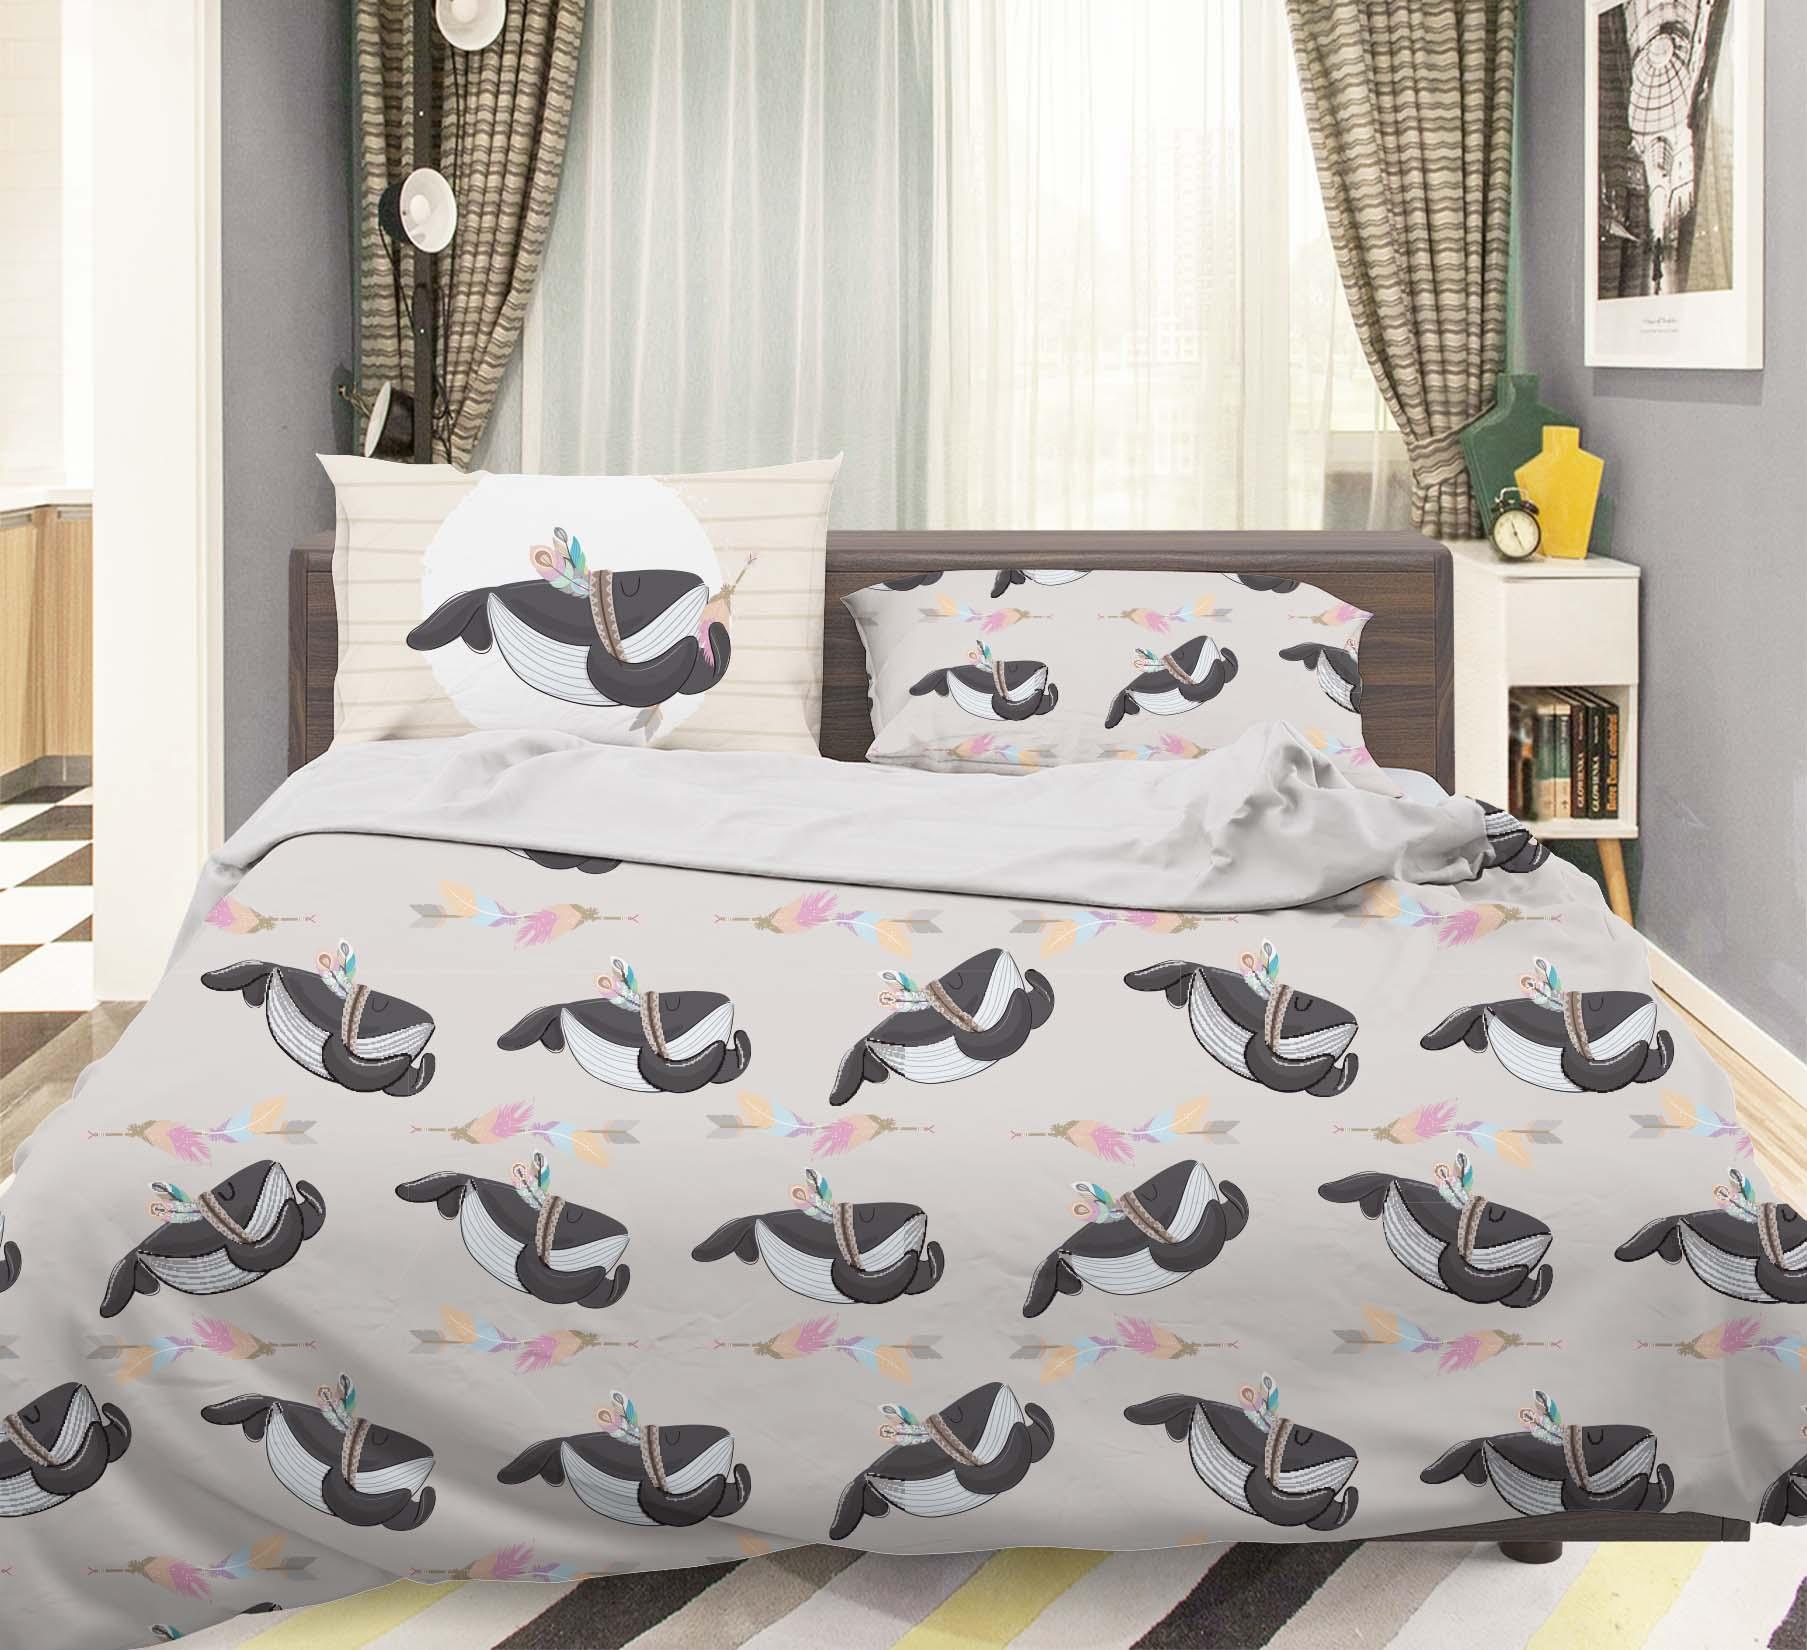 3D Shark Feather Arrow Quilt Cover Set Bedding Set Pillowcases 08- Jess Art Decoration